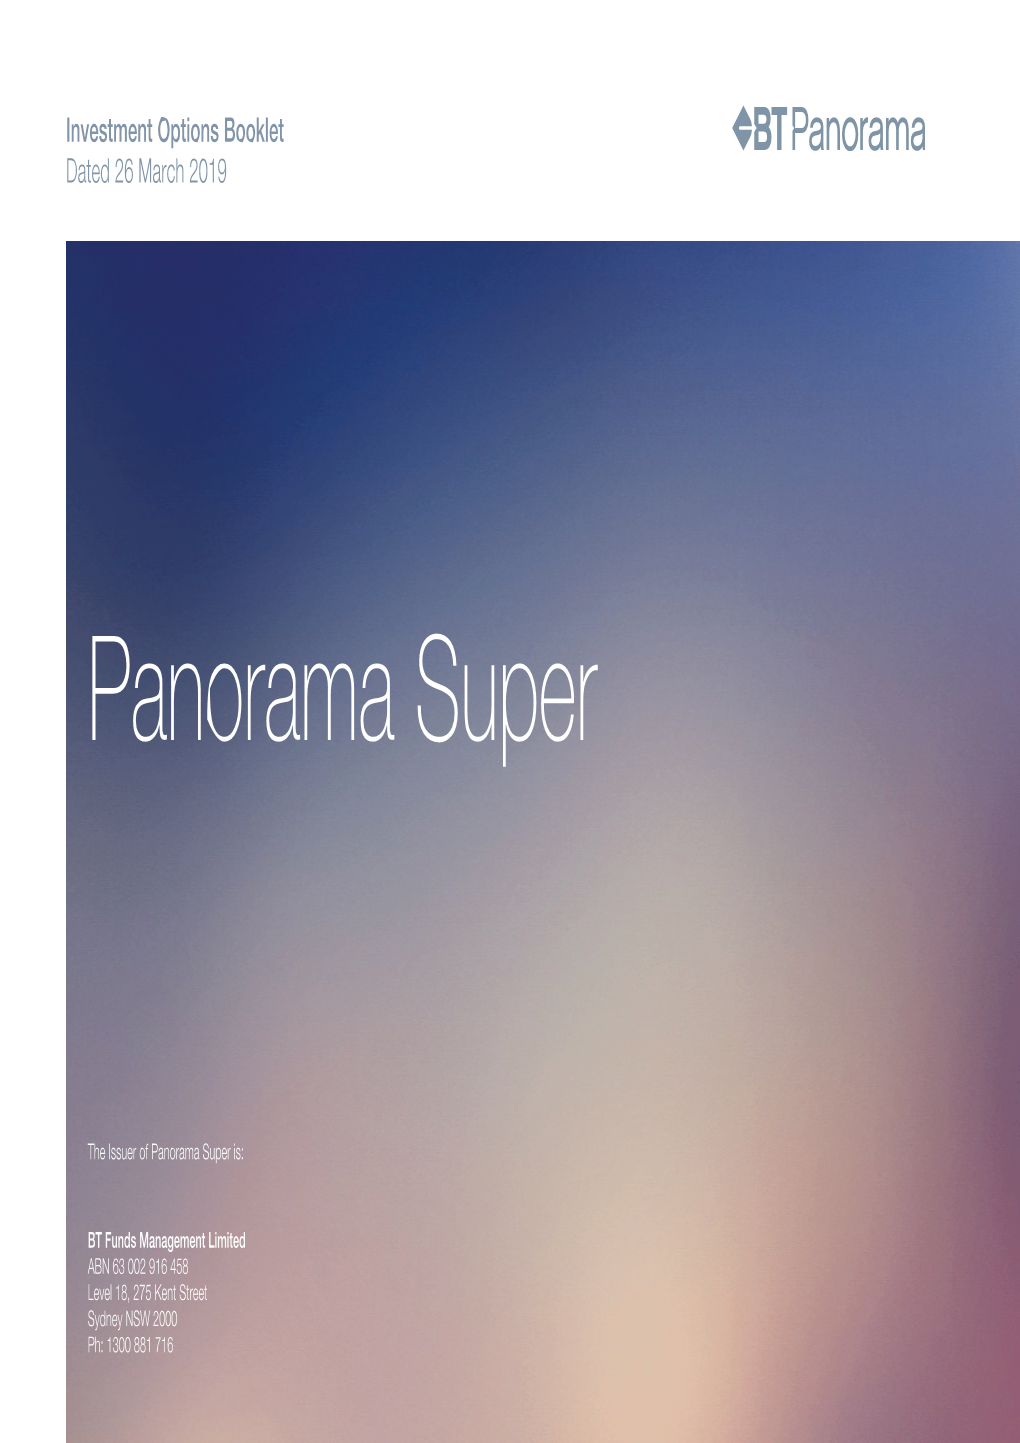 Panorama-Super-Investment-Options